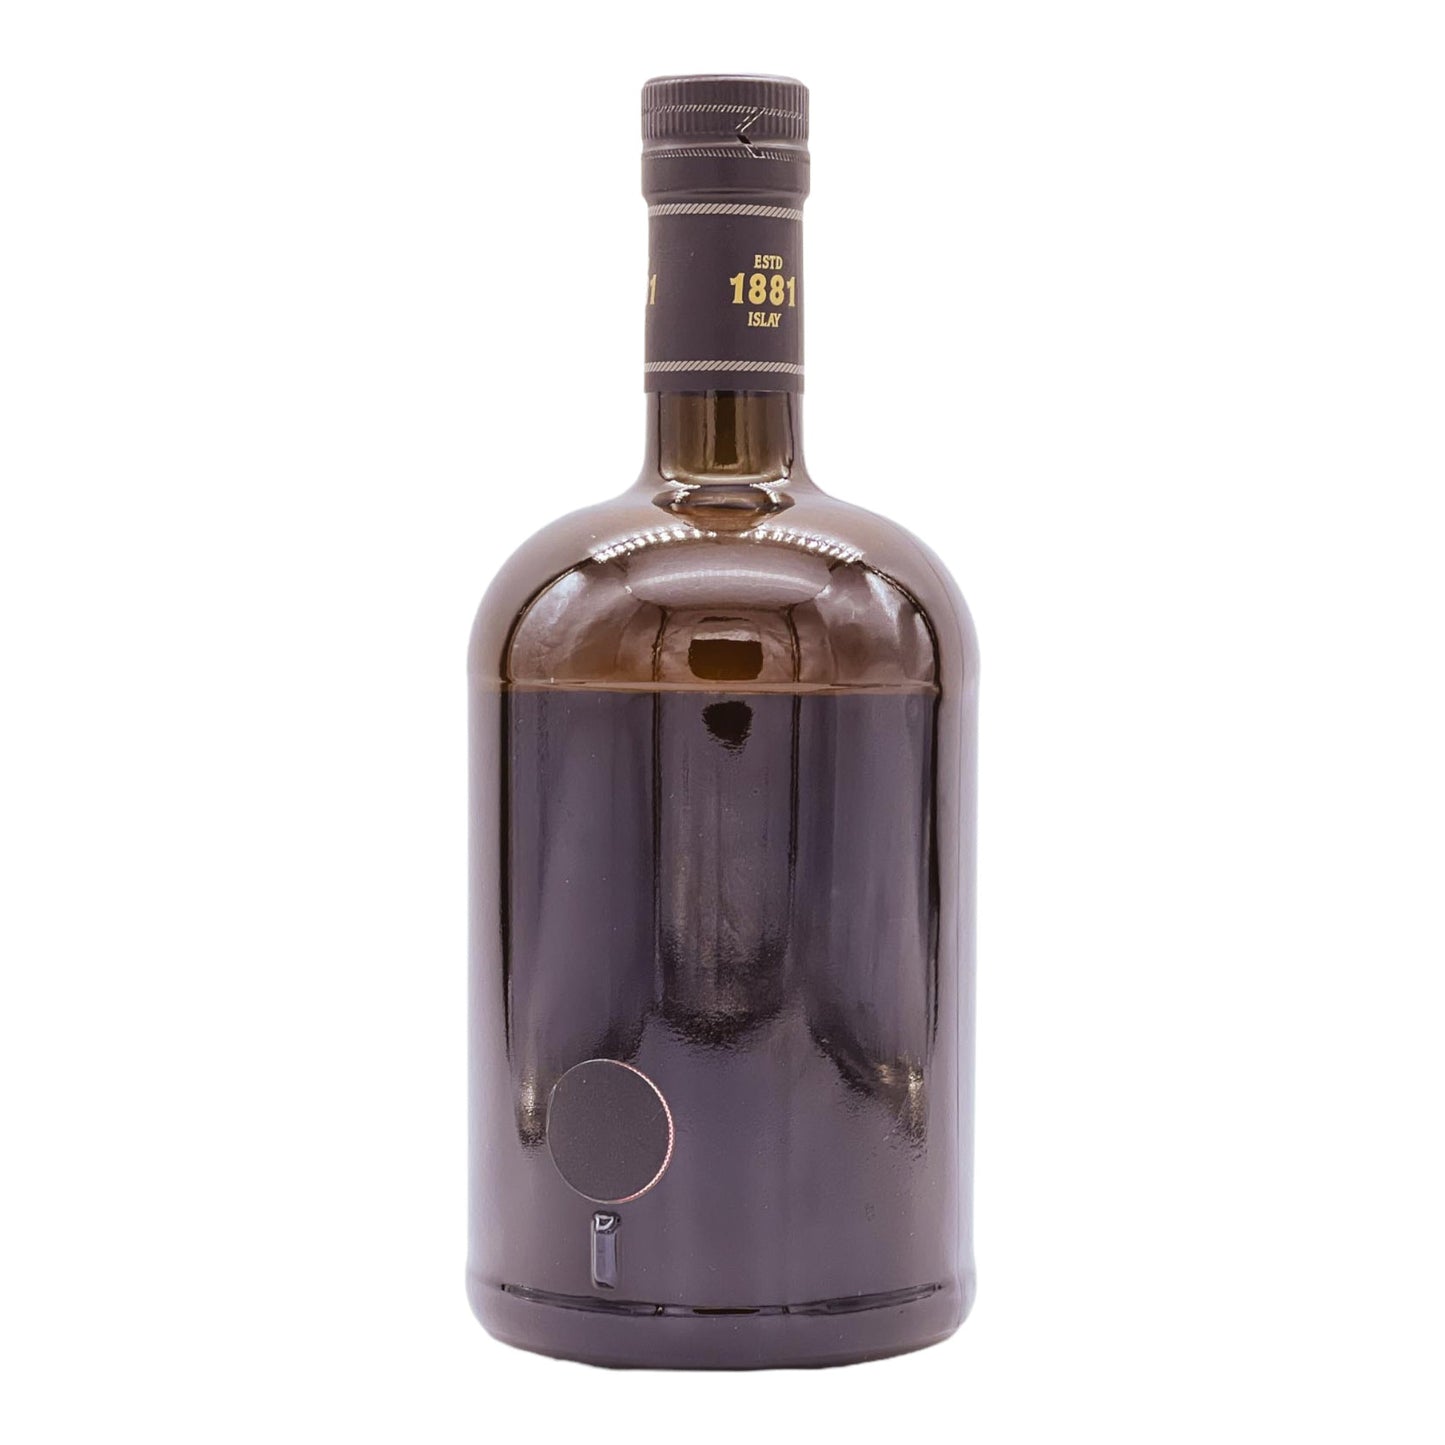 Bunnahabhain | 8 Jahre | The Coterie Exclusive Release 2020 | 2012 Rum Cask | 0,7l | 56,9%GET A BOTTLE